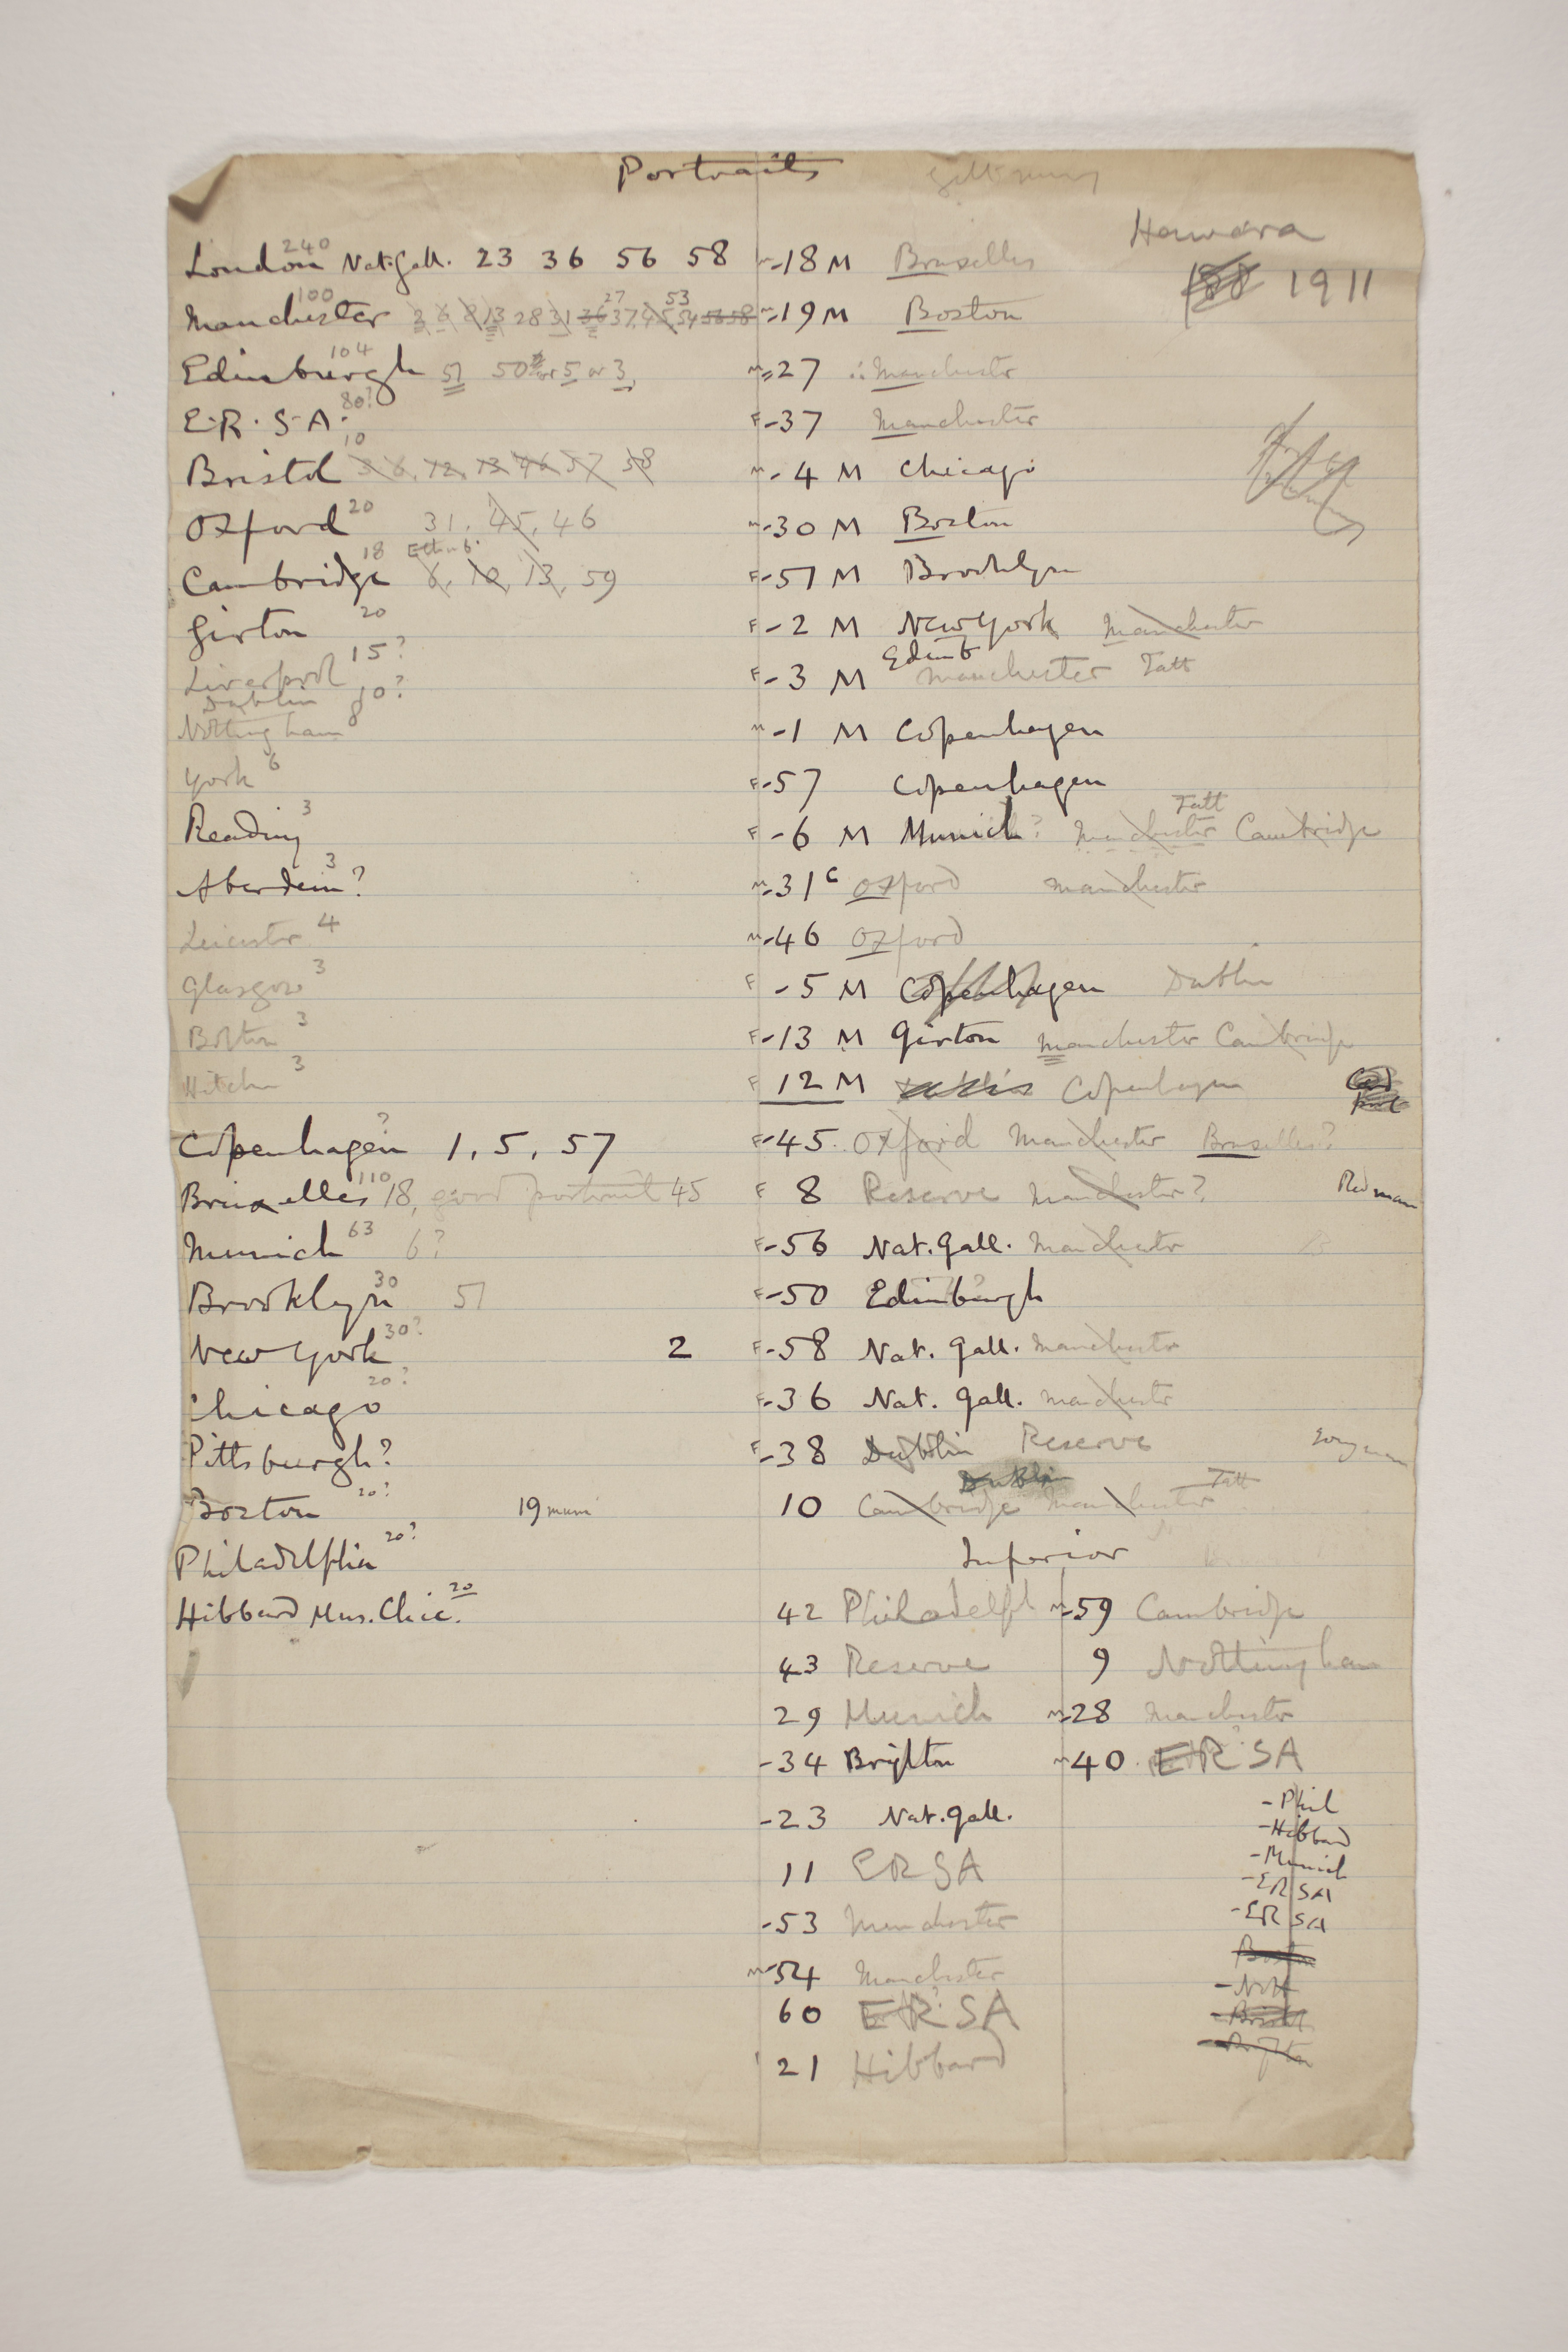 1910-11 Hawara, Gerzeh, Memphis, Mazghuneh Multiple institution list PMA/WFP1/D/19/4.1